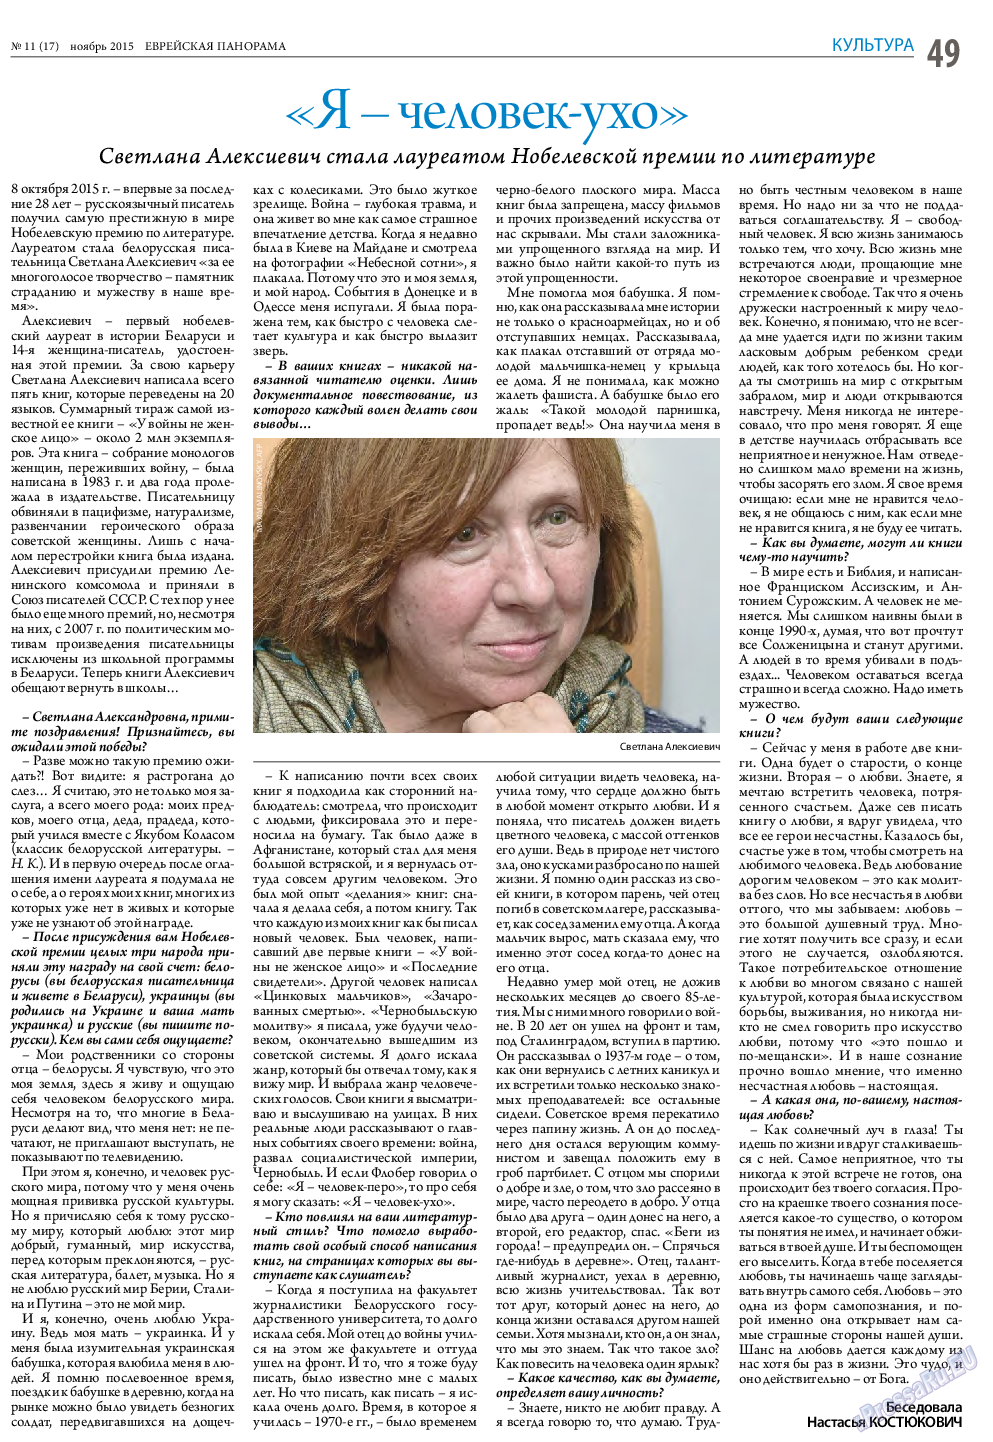 Еврейская панорама, газета. 2015 №11 стр.49